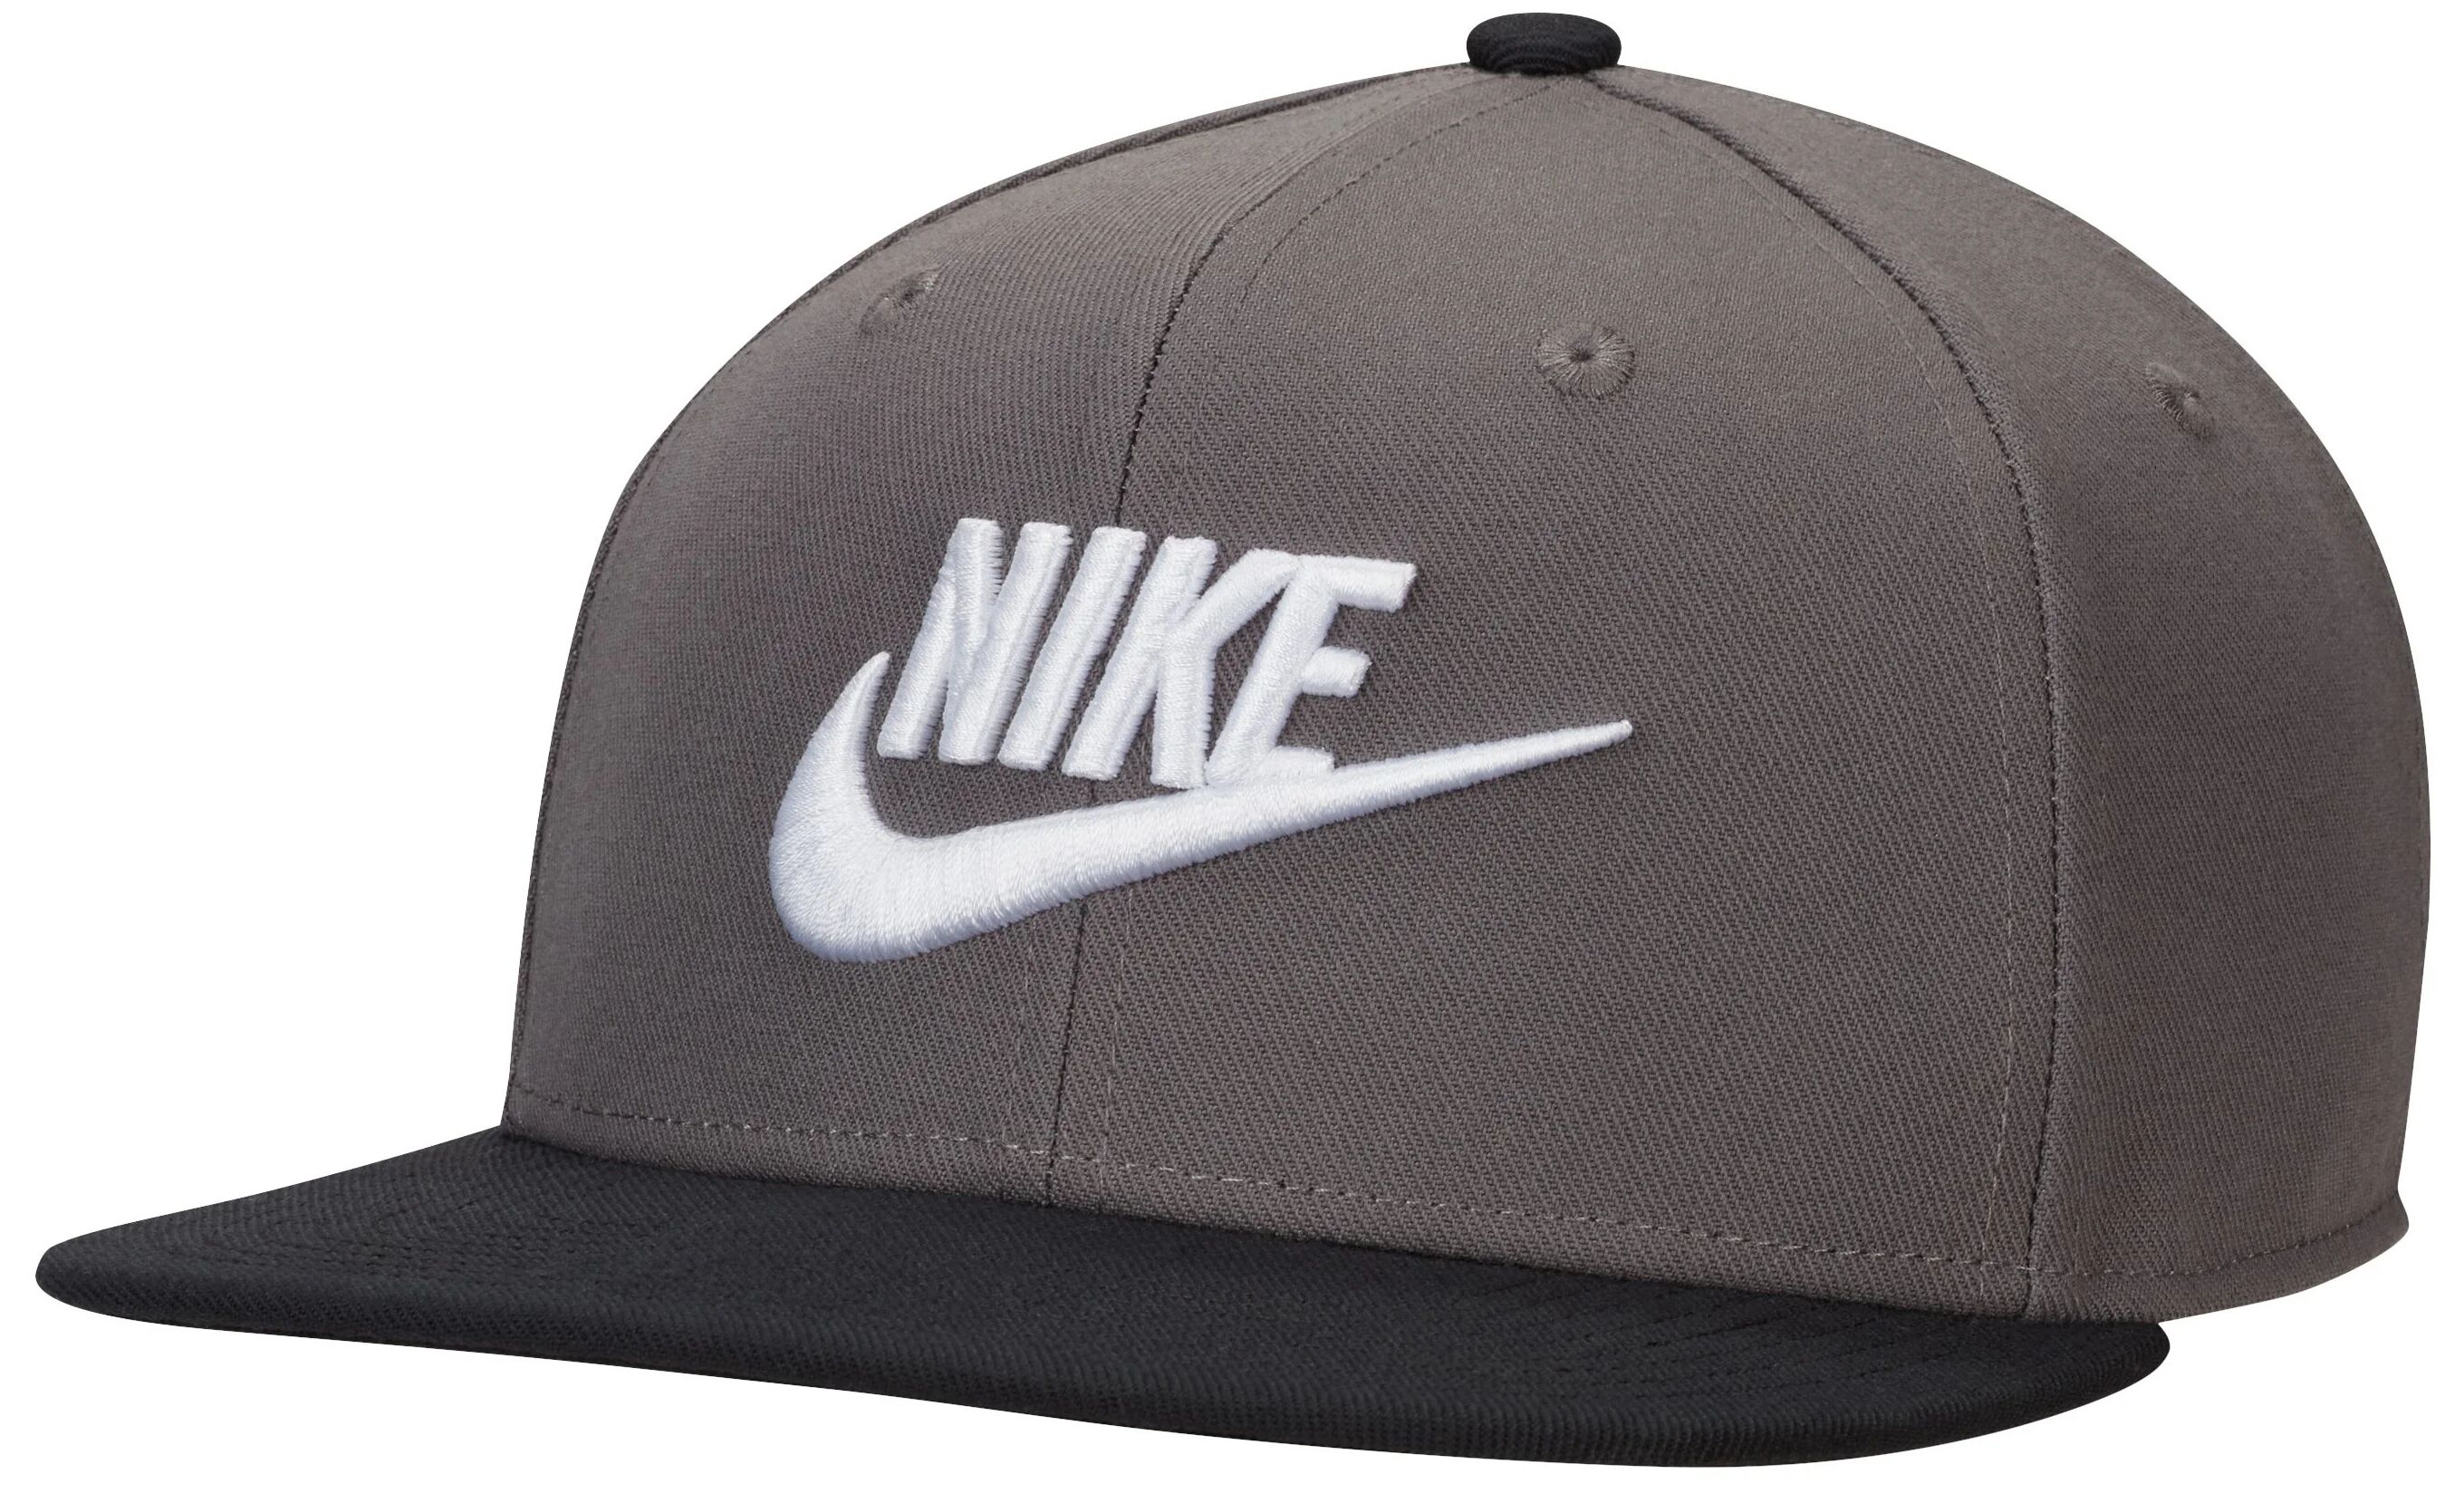 Nike Dri-FIT Pro Structured Futura Men's Golf Hat - Grey, Size: Medium/Large